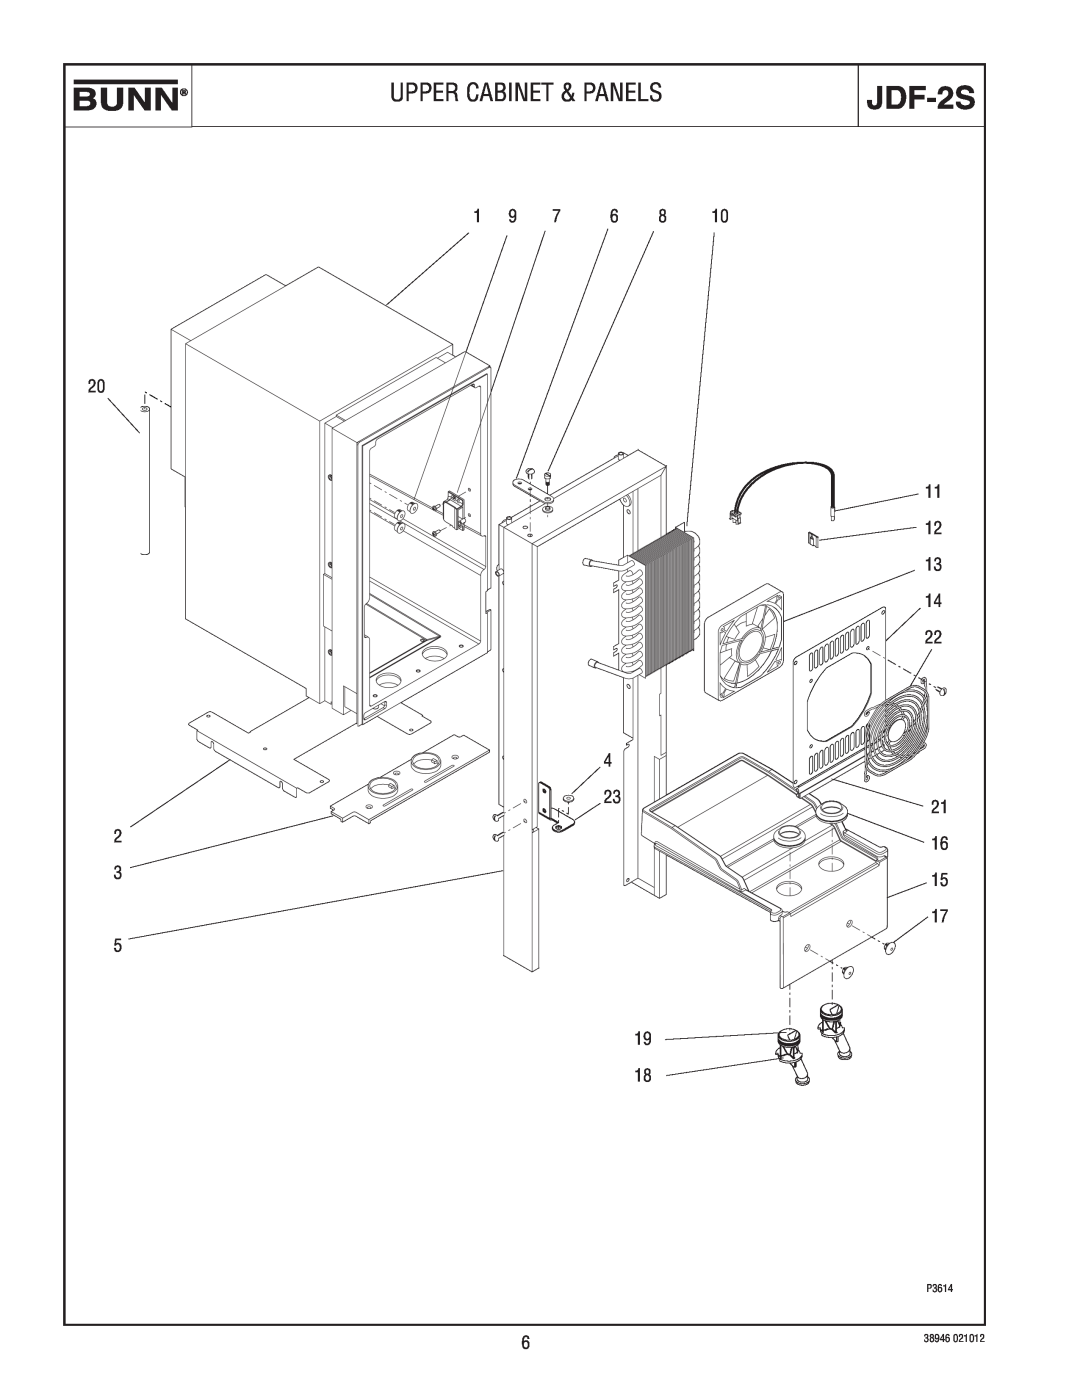 Bunn JDF-2S manual Upper Cabinet & Panels, P3614 